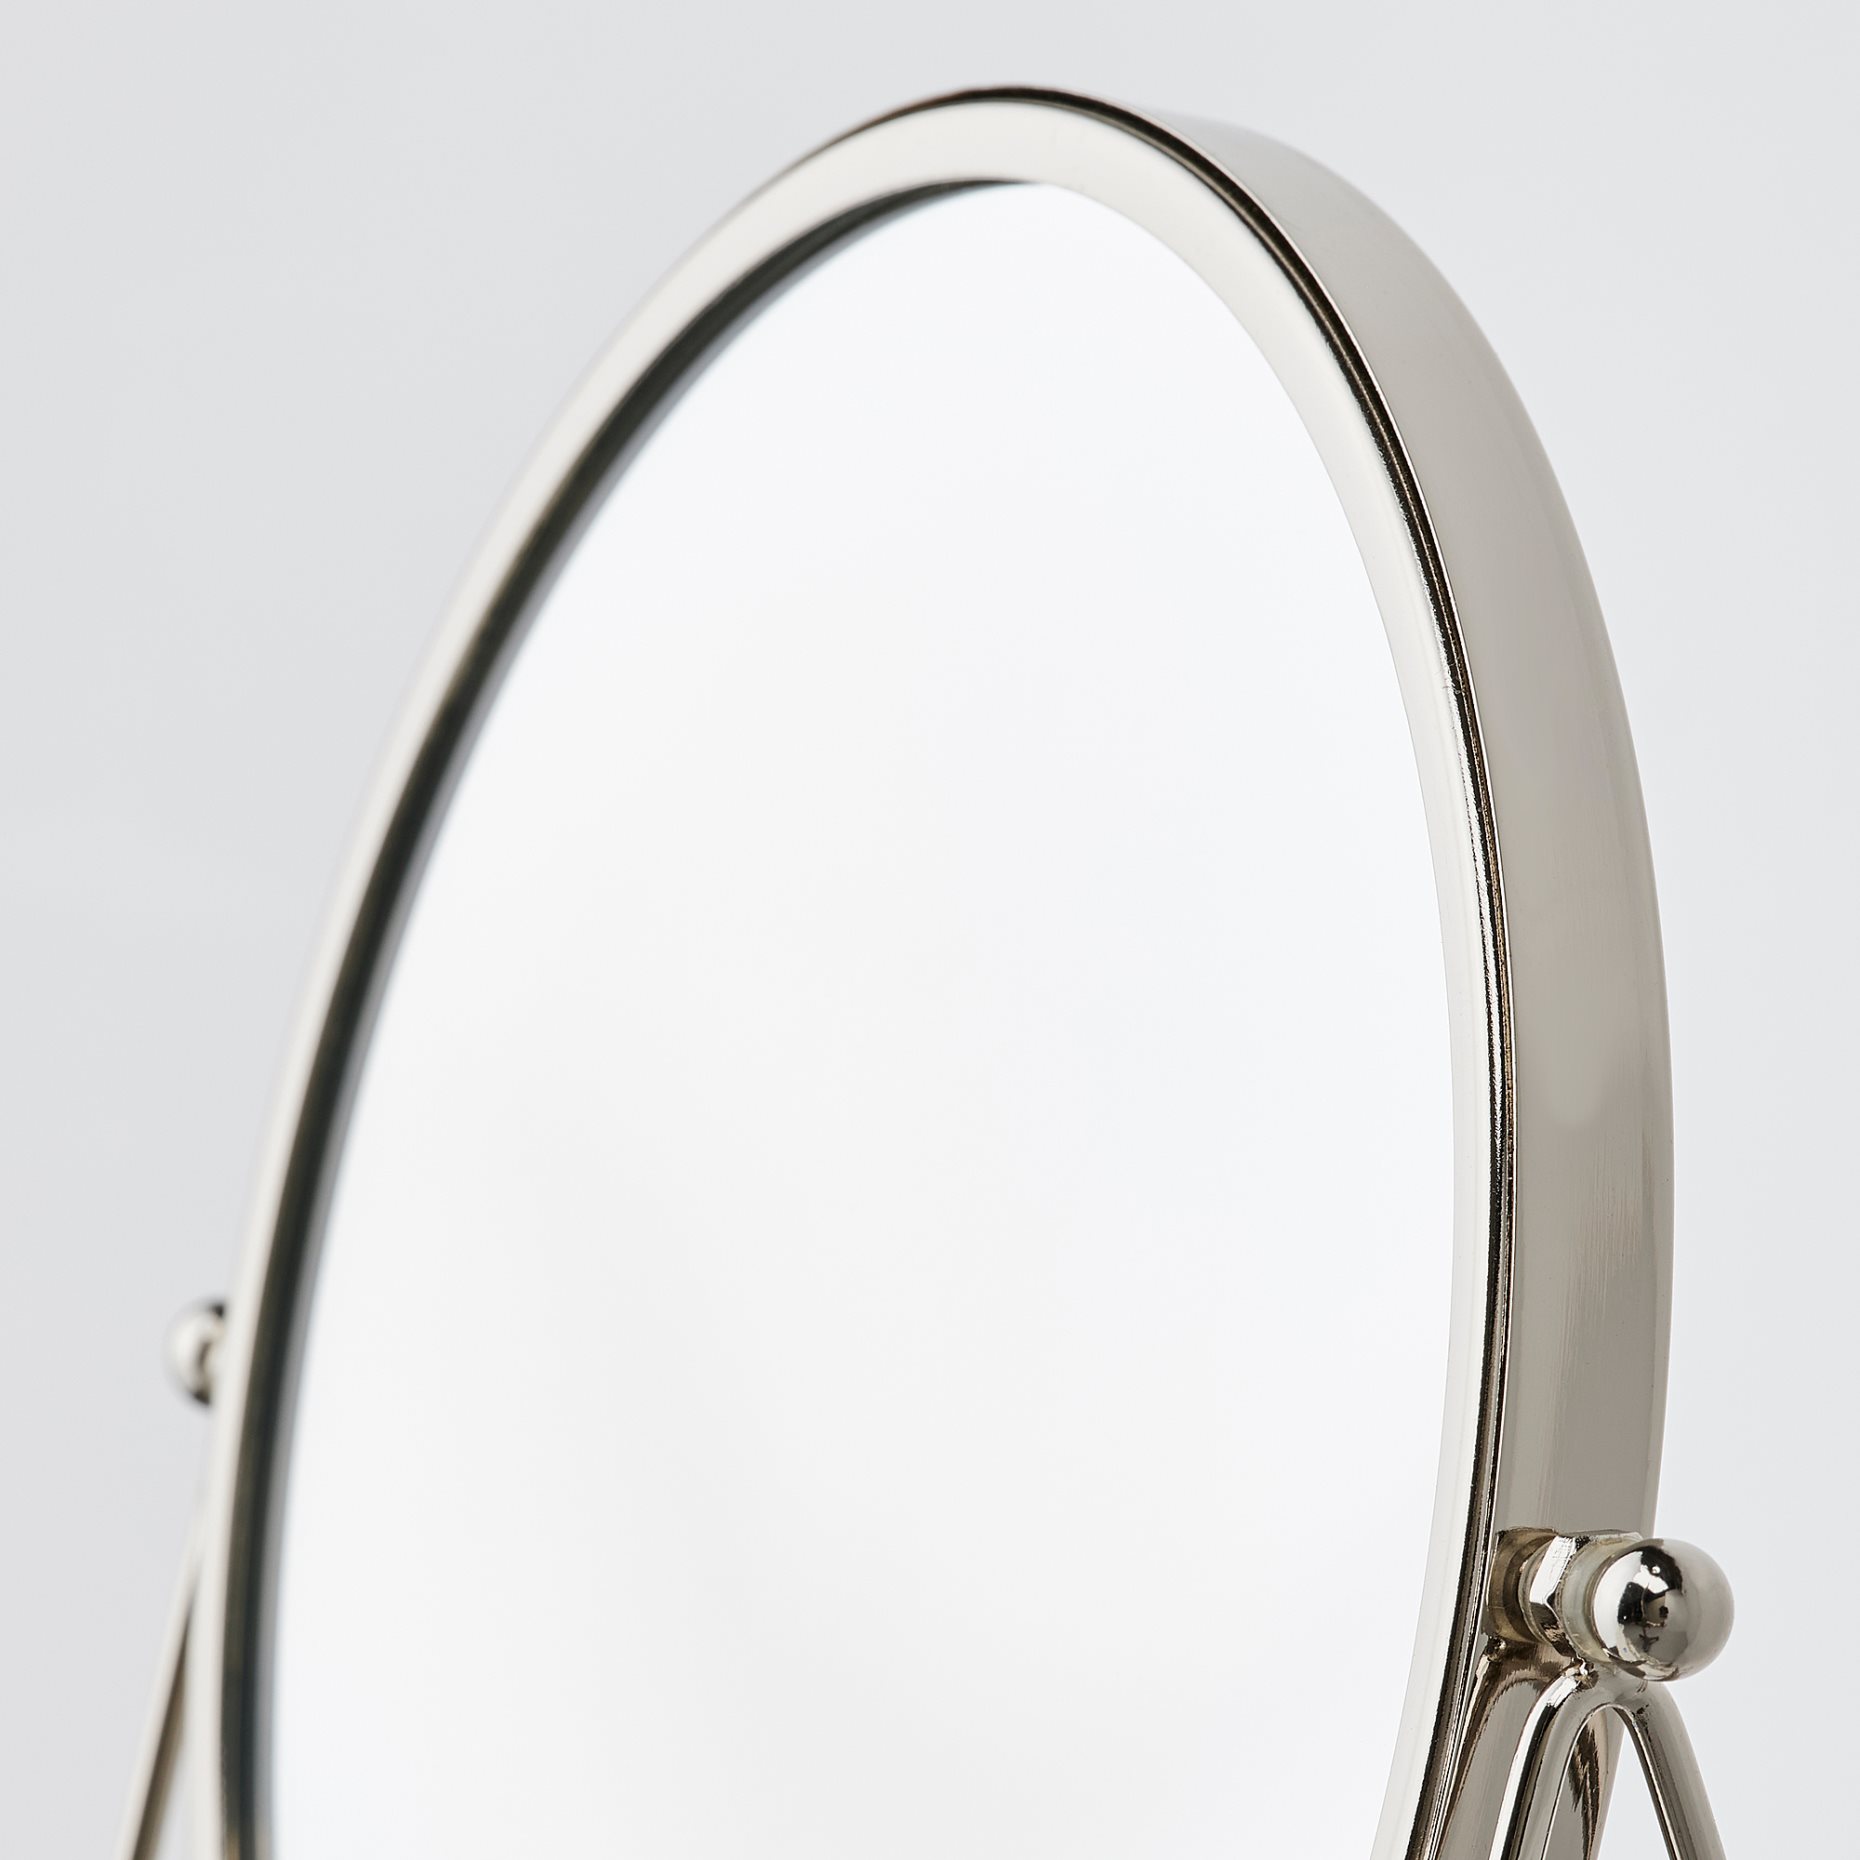 LASSBYN, επιτραπέζιος καθρέφτης, 17 cm, 405.163.13